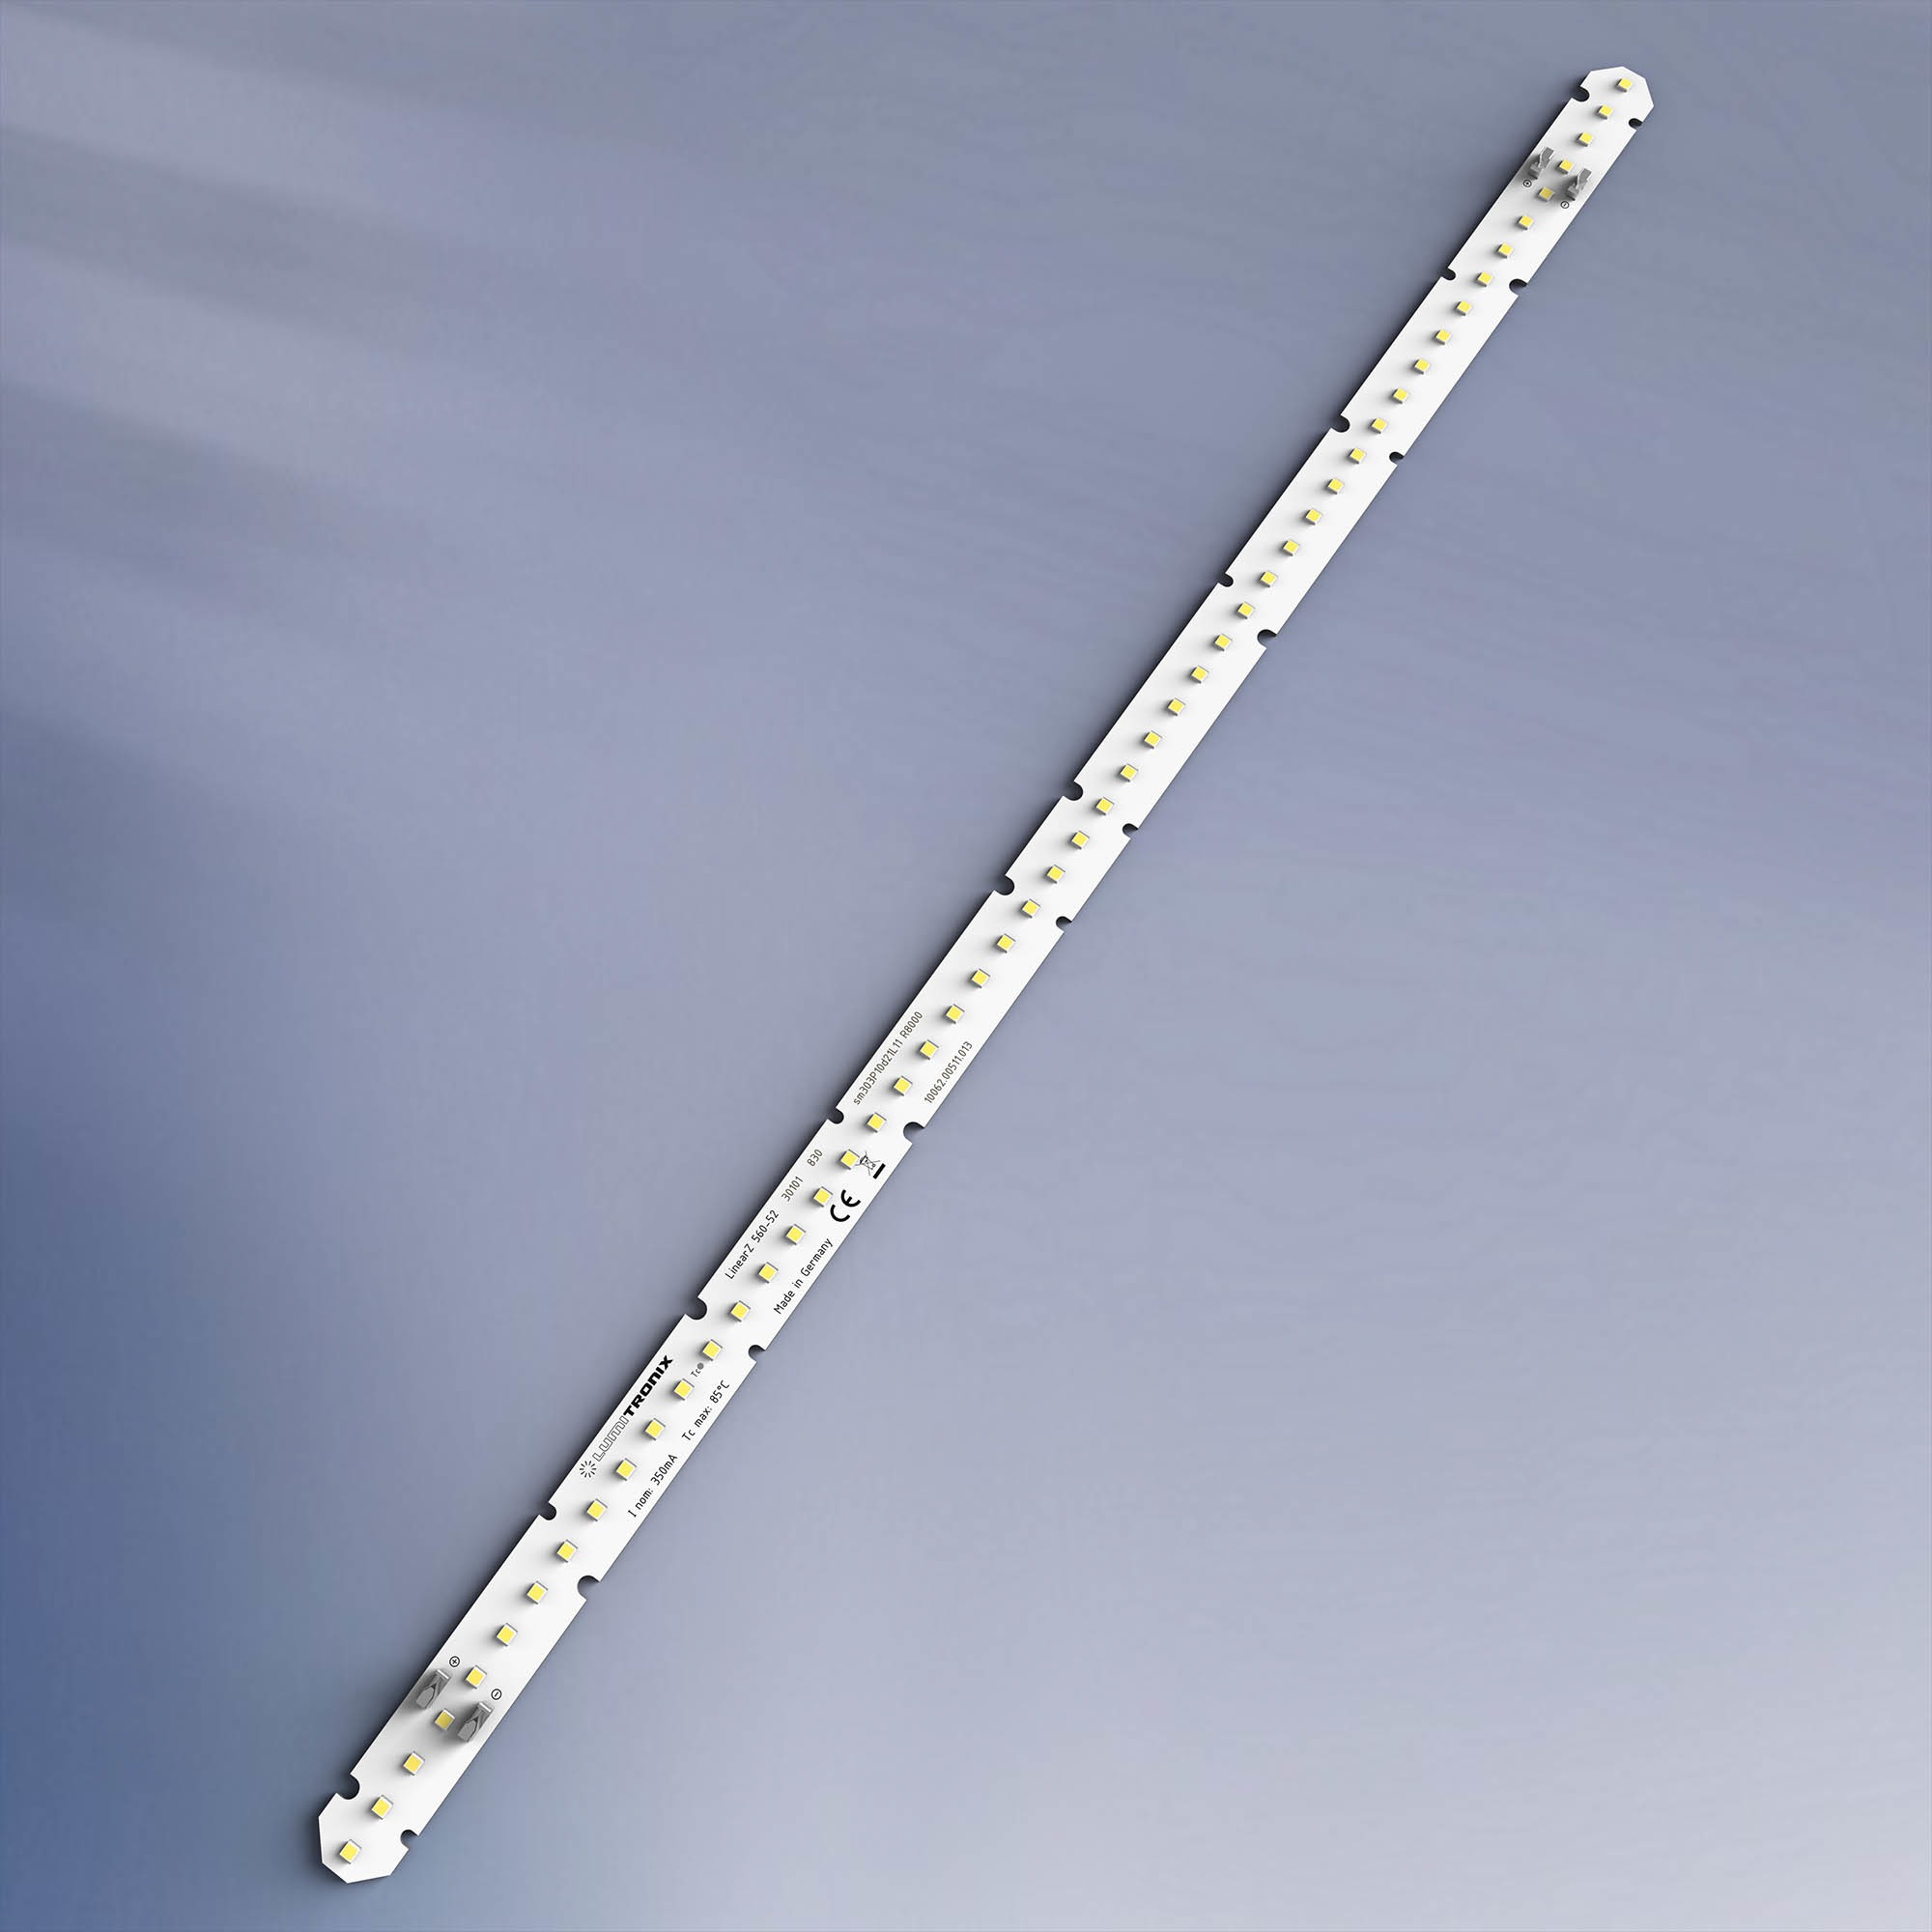 LumiBar-52-3098+ Toshiba-SSC LED Strip Sunlike CRI98 warm white 2700K 1325lm 350mA 39.6V 52 LEDs 22.05in/56cm module (721lm/ft 7.6W/ft)